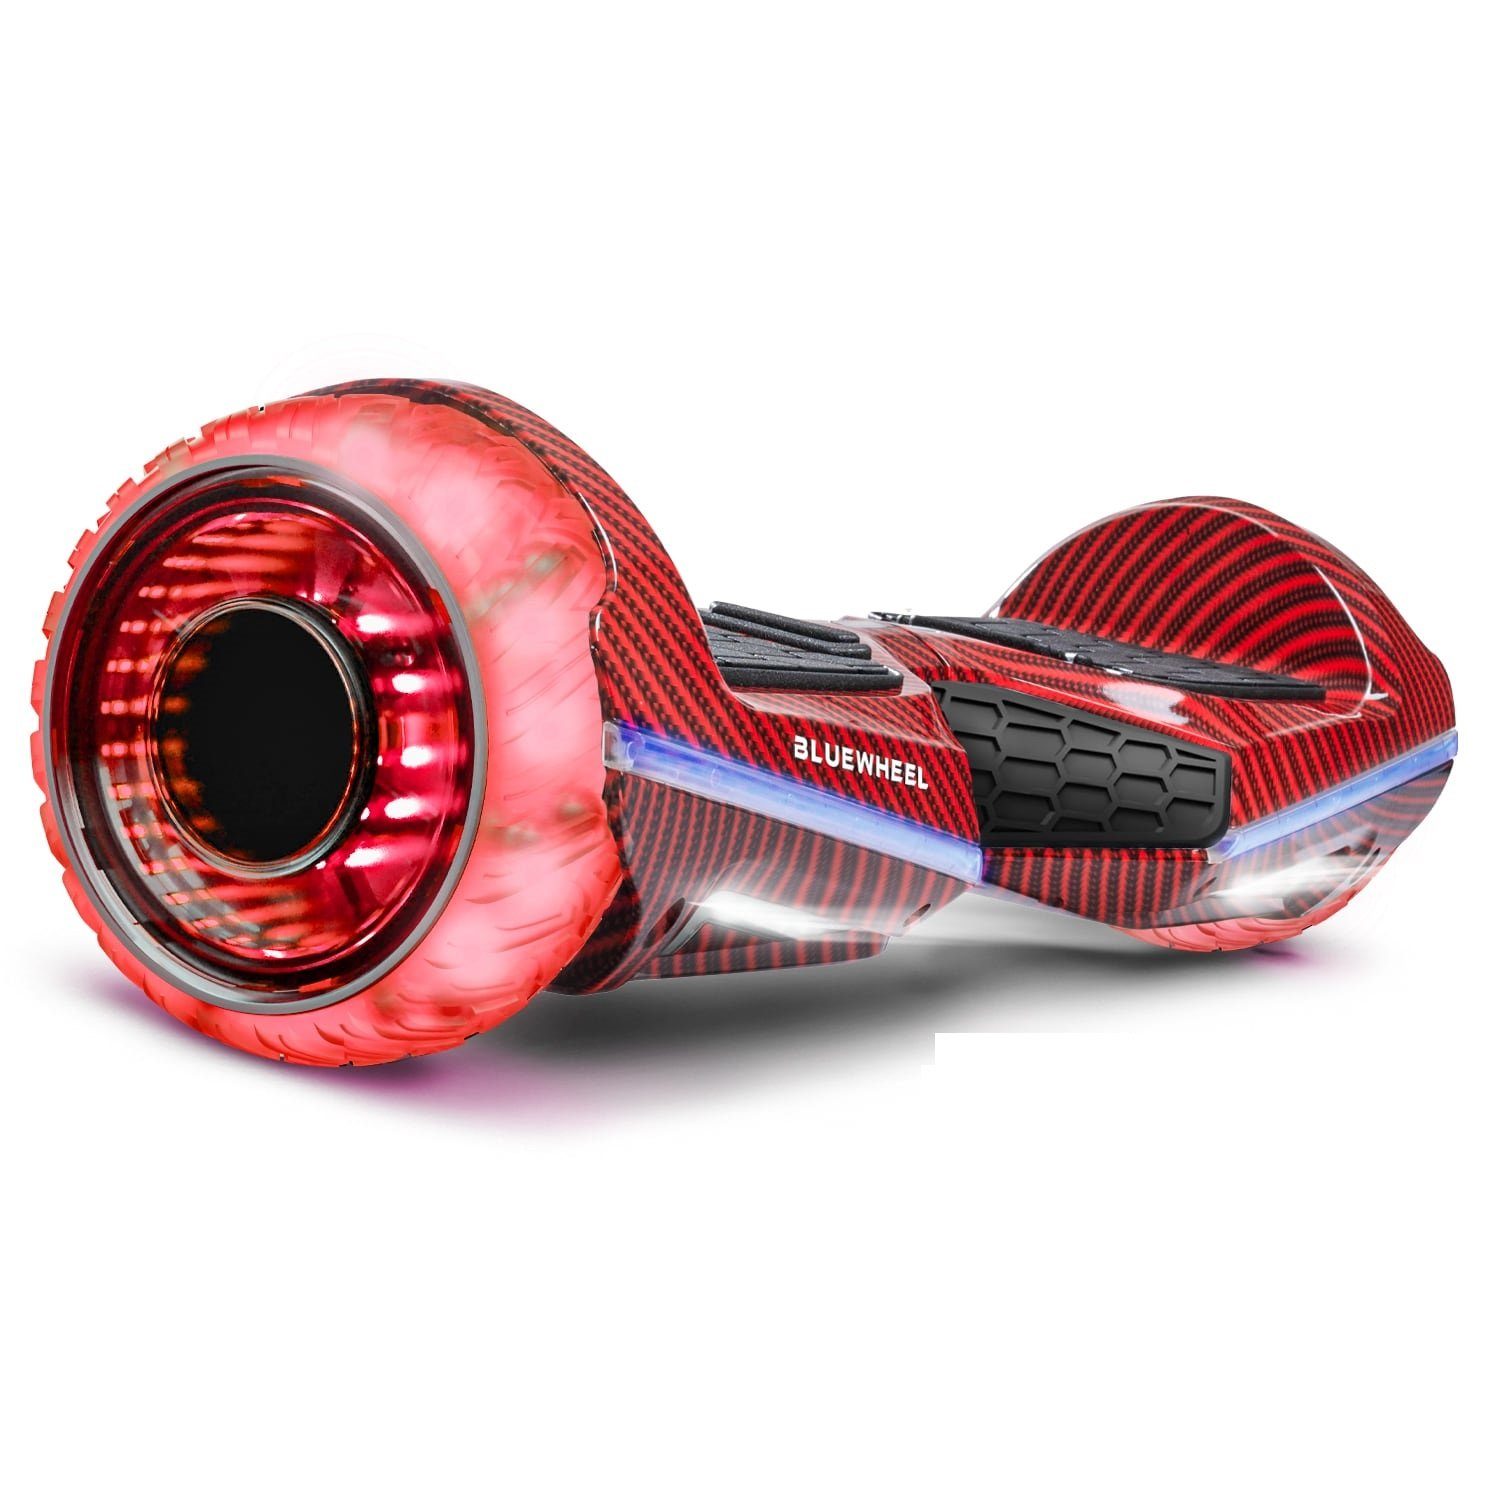 Bluewheel Electromobility Skateboard HX360, 6,5“ Premium Hoverboard Bluewheel HX360 Red Carbon